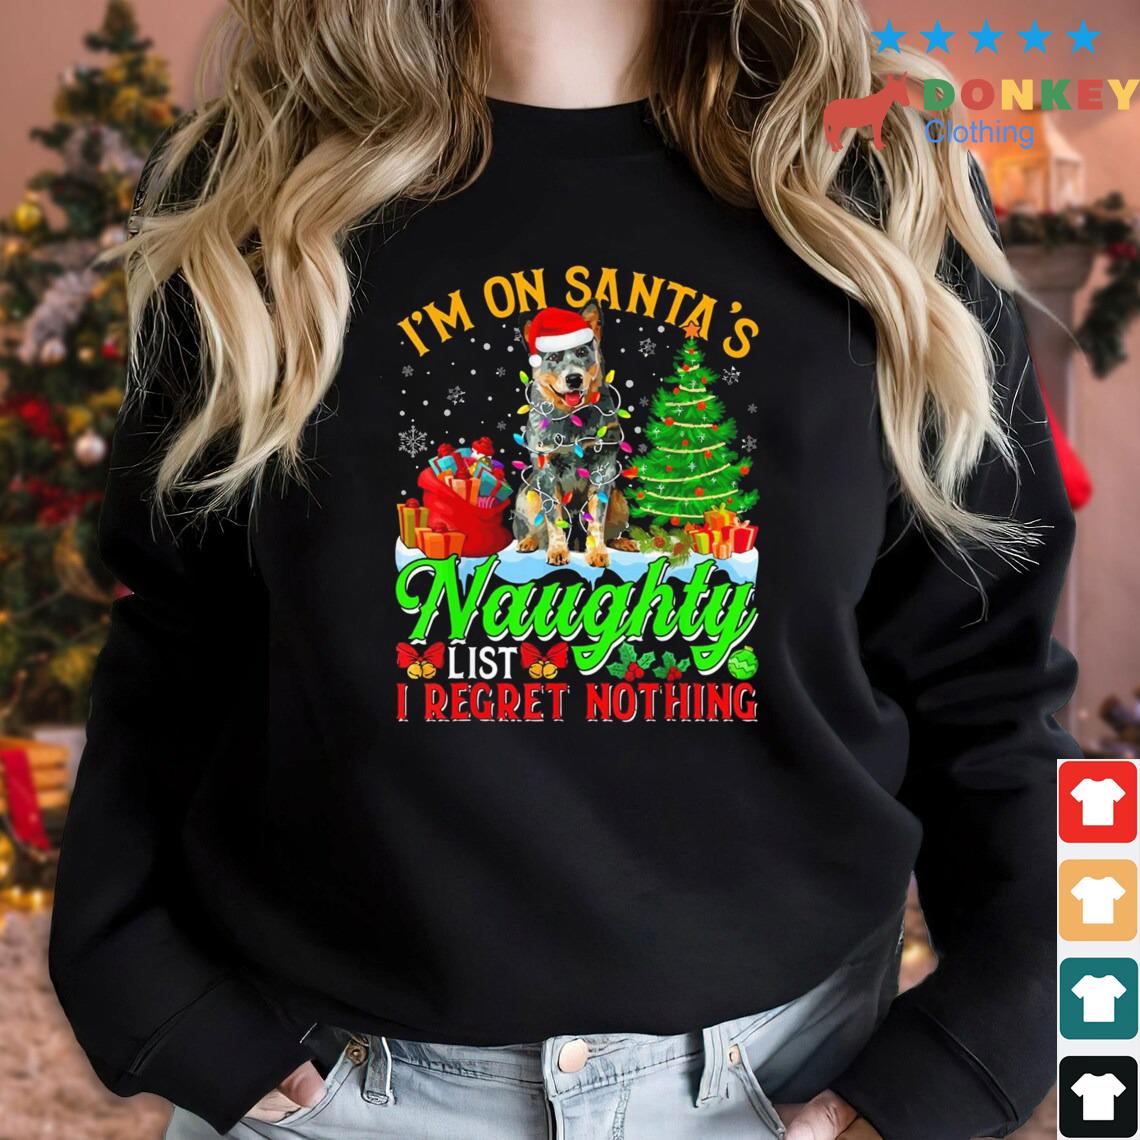 I'm On Santa’s Naughty List I Regret Nothing Australian Cattle Dog Christmas Sweater